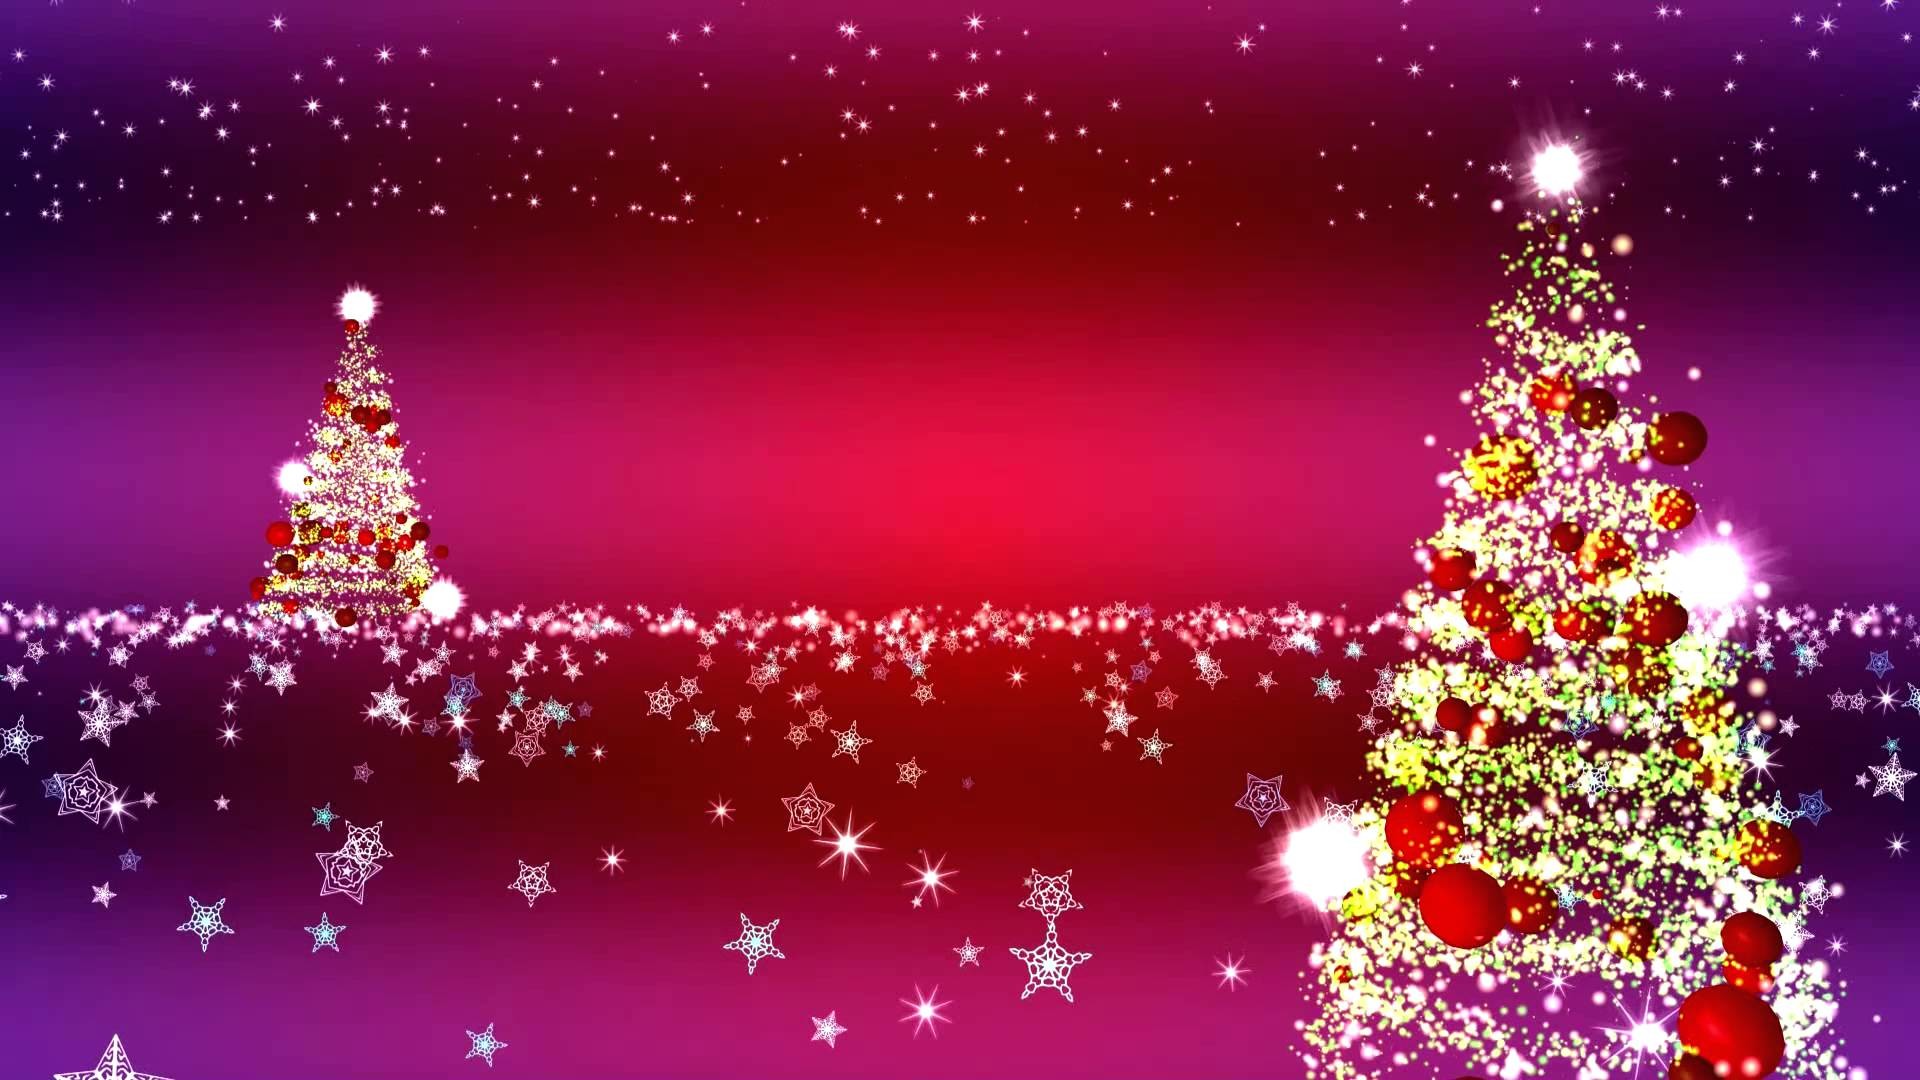 1920x1080 2015 animated Christmas backgrounds